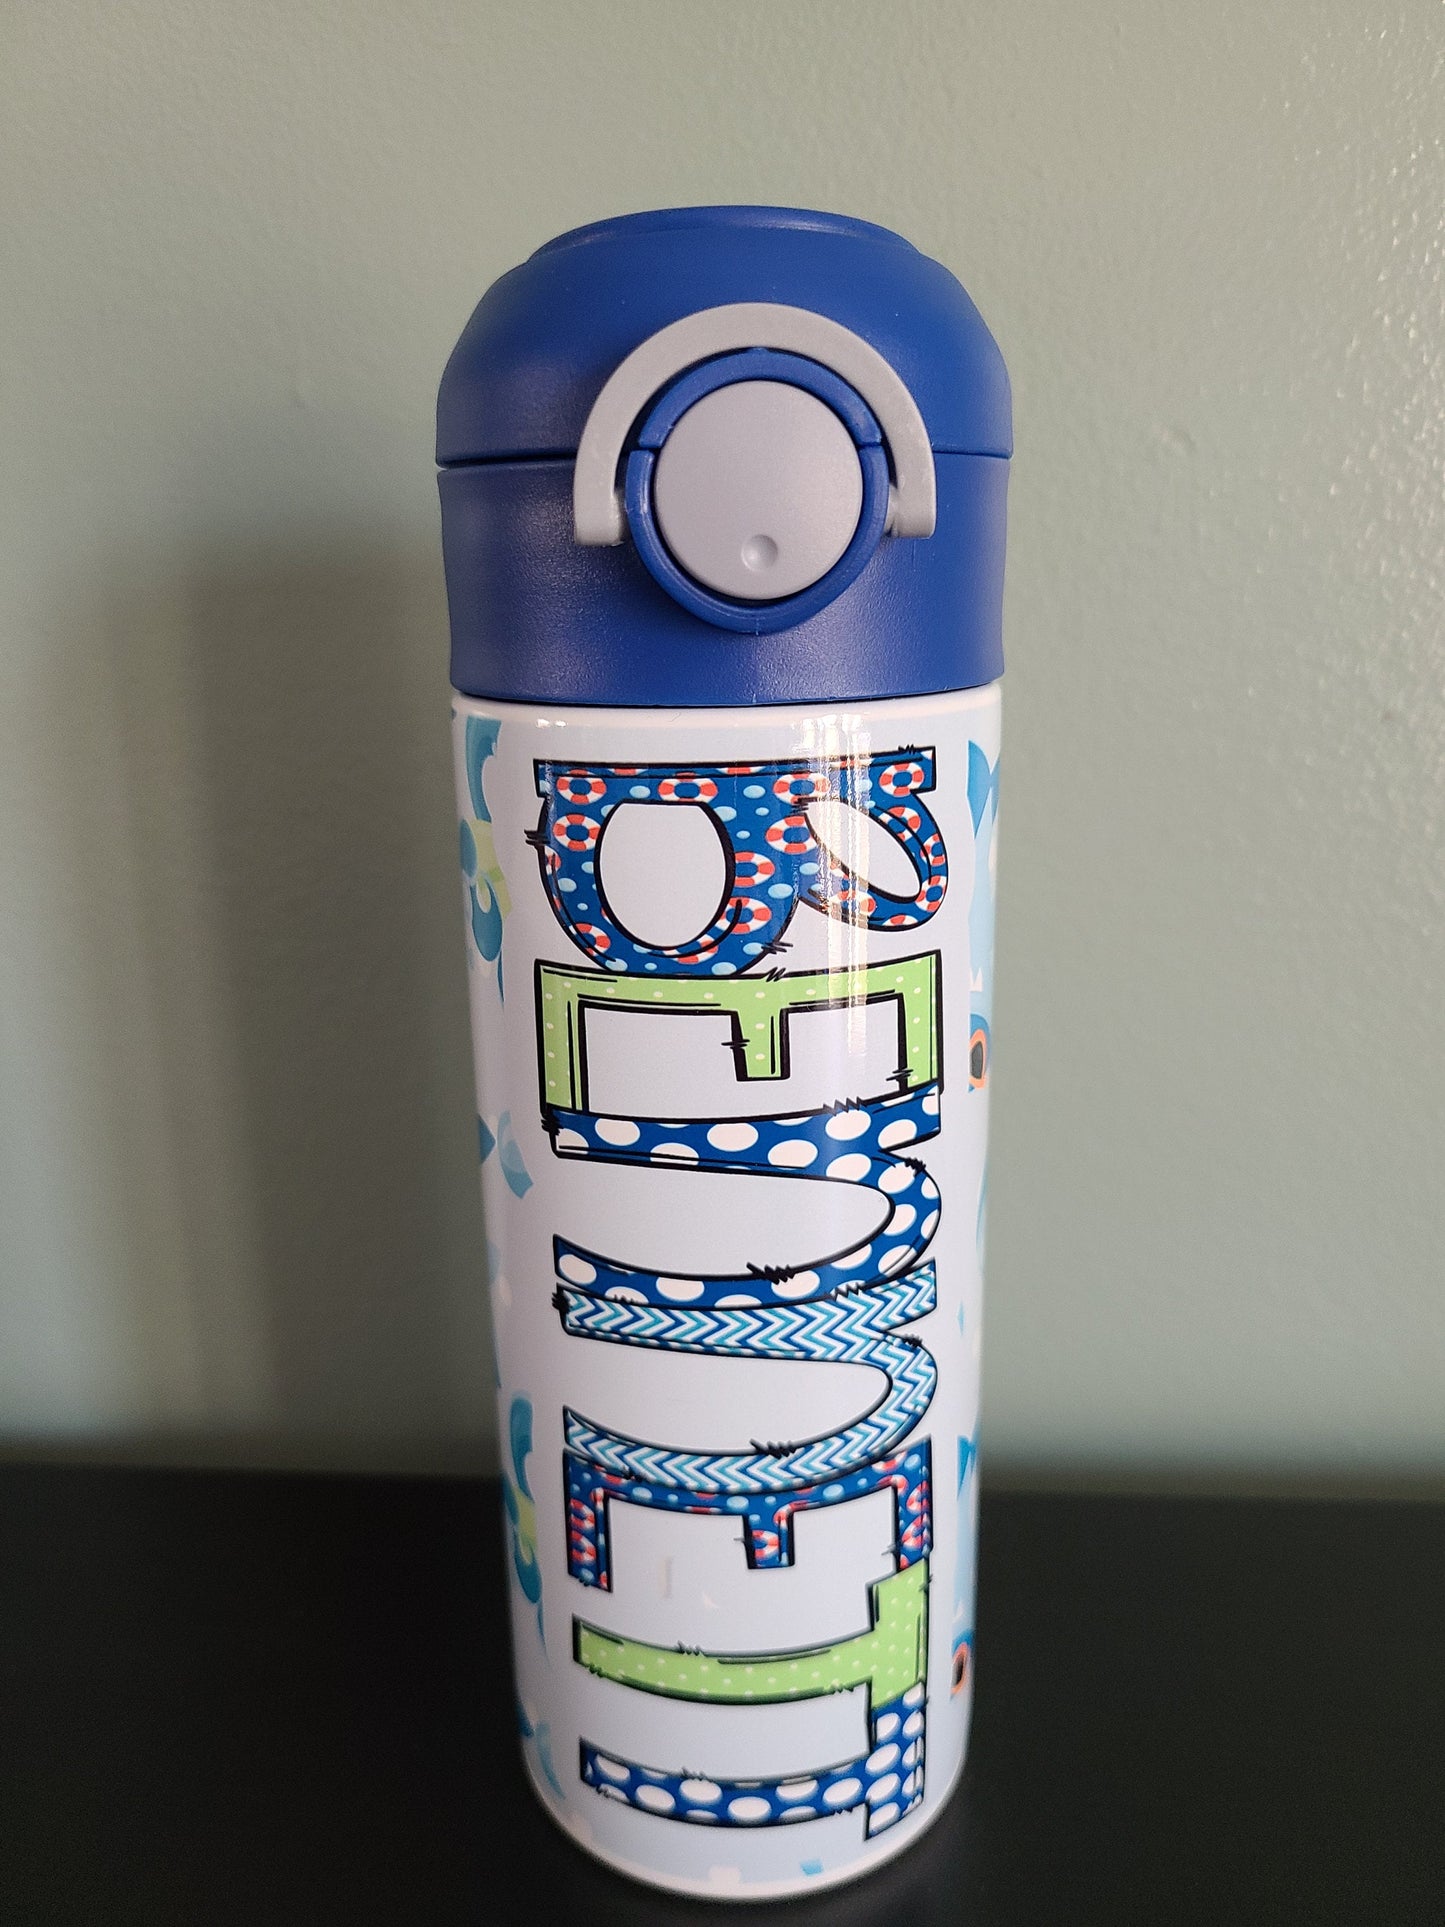 Personalized Sharks Water Bottle - 12 oz Flip Top Water Bottle with Straw